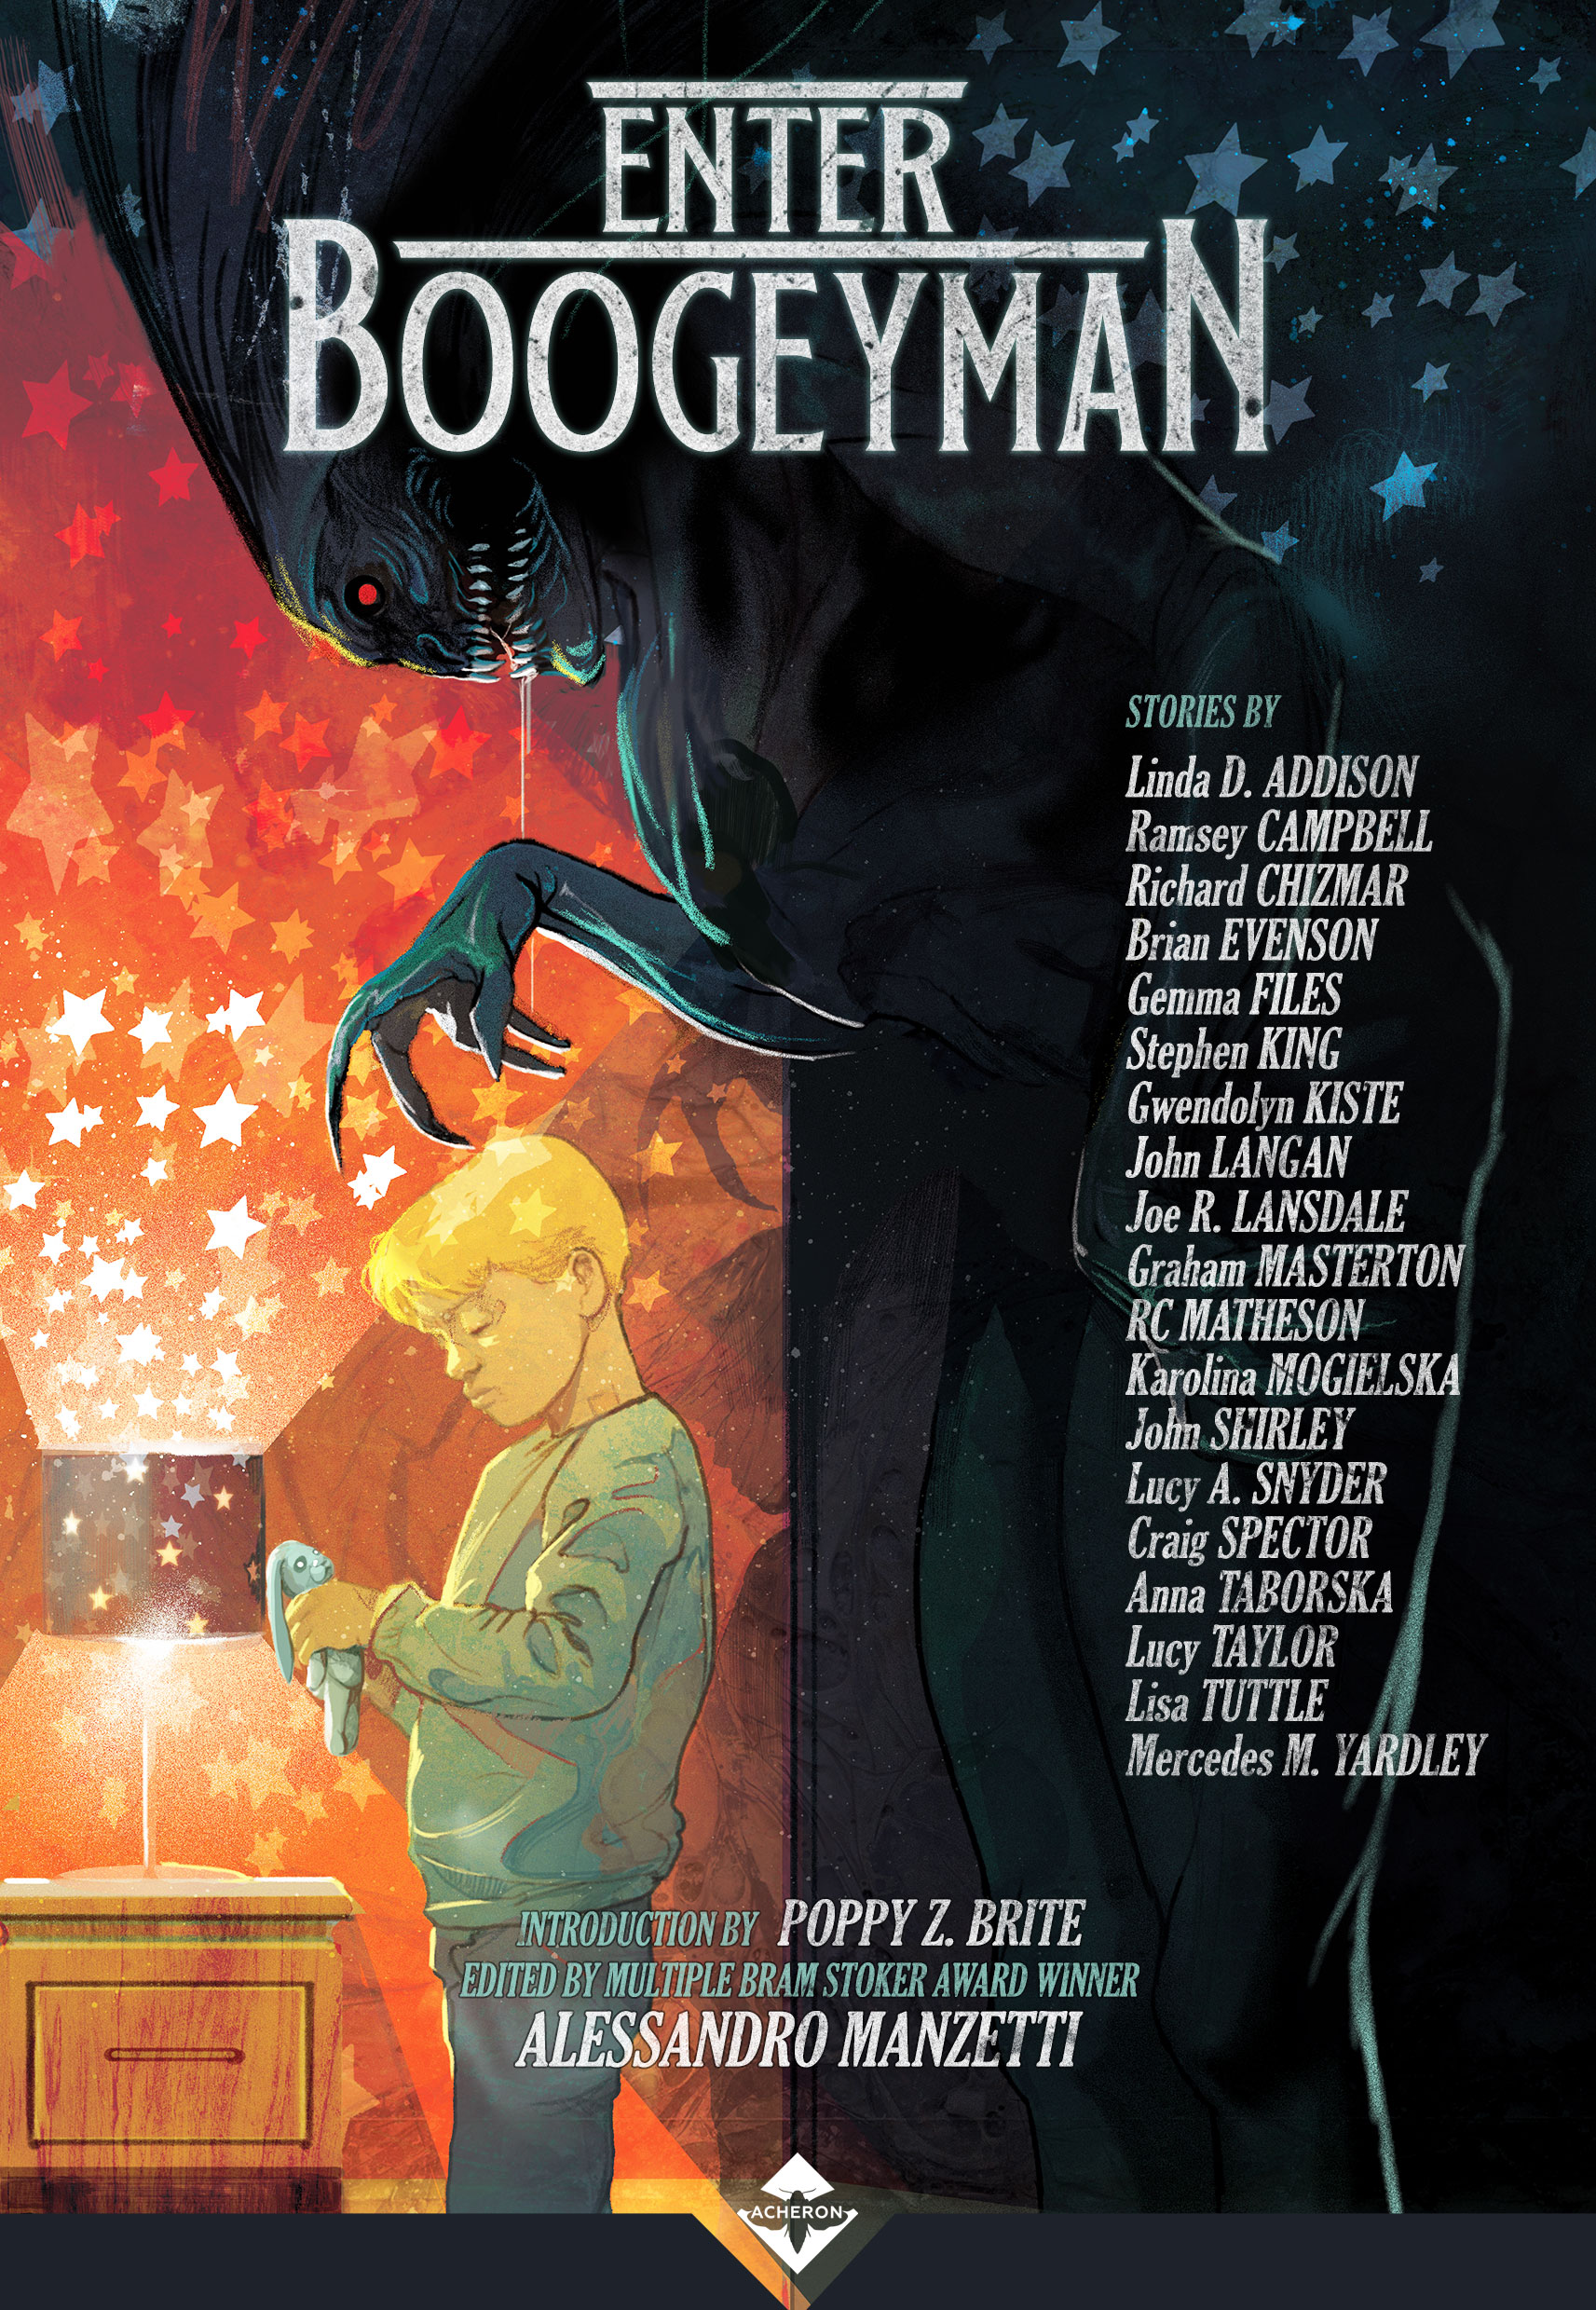 Announcing the Enter Boogeyman anthology!